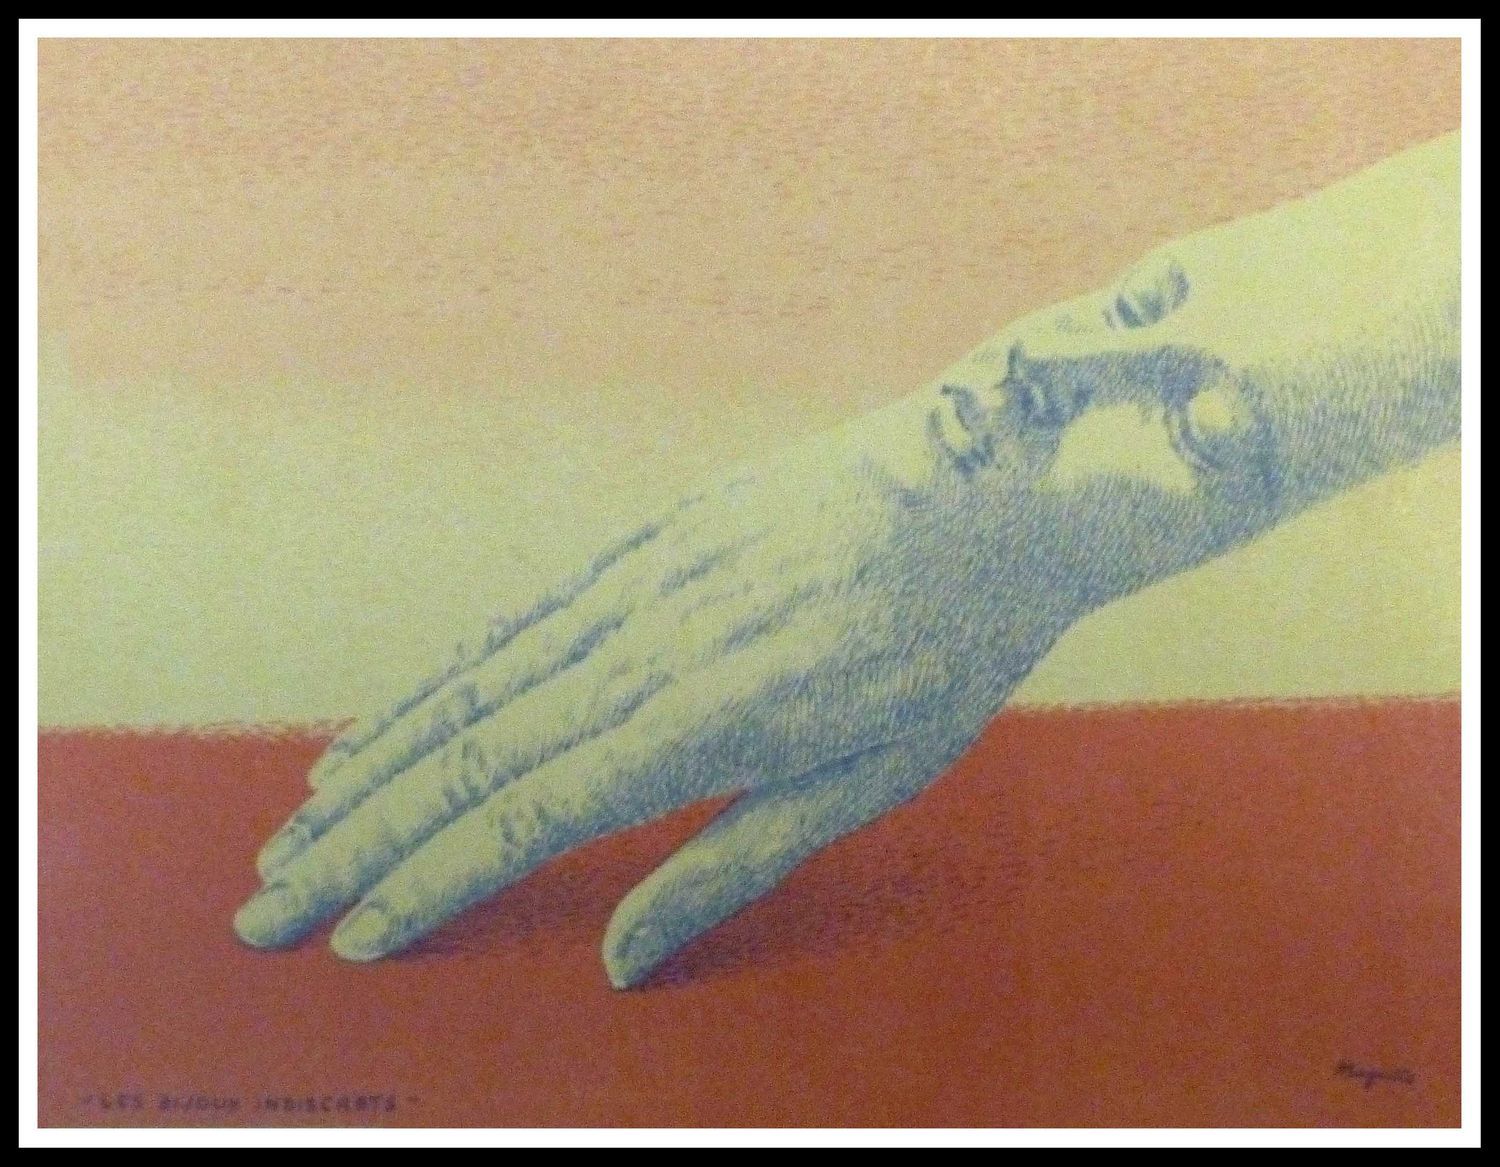 René Magritte 勒内-马格里特 (1901 - 1980)
Les bijoux indiscrets, 1962年

原创石版画 - 限量版
版面&hellip;